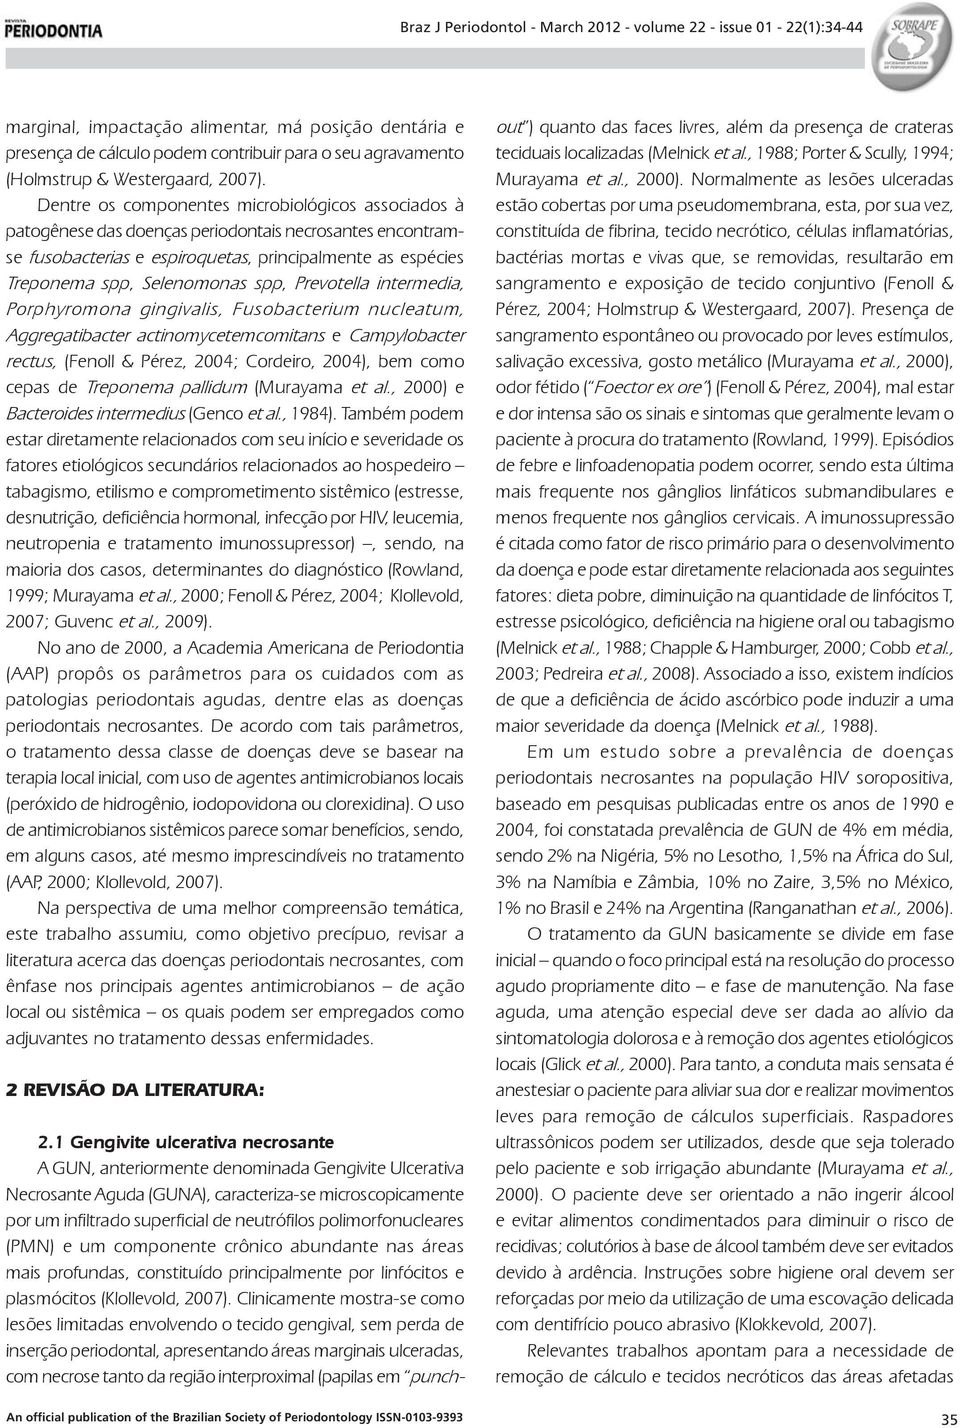 Prevotella intermedia, Porphyromona gingivalis, Fusobacterium nucleatum, Aggregatibacter actinomycetemcomitans e Campylobacter rectus, (Fenoll & Pérez, 2004; Cordeiro, 2004), bem como cepas de